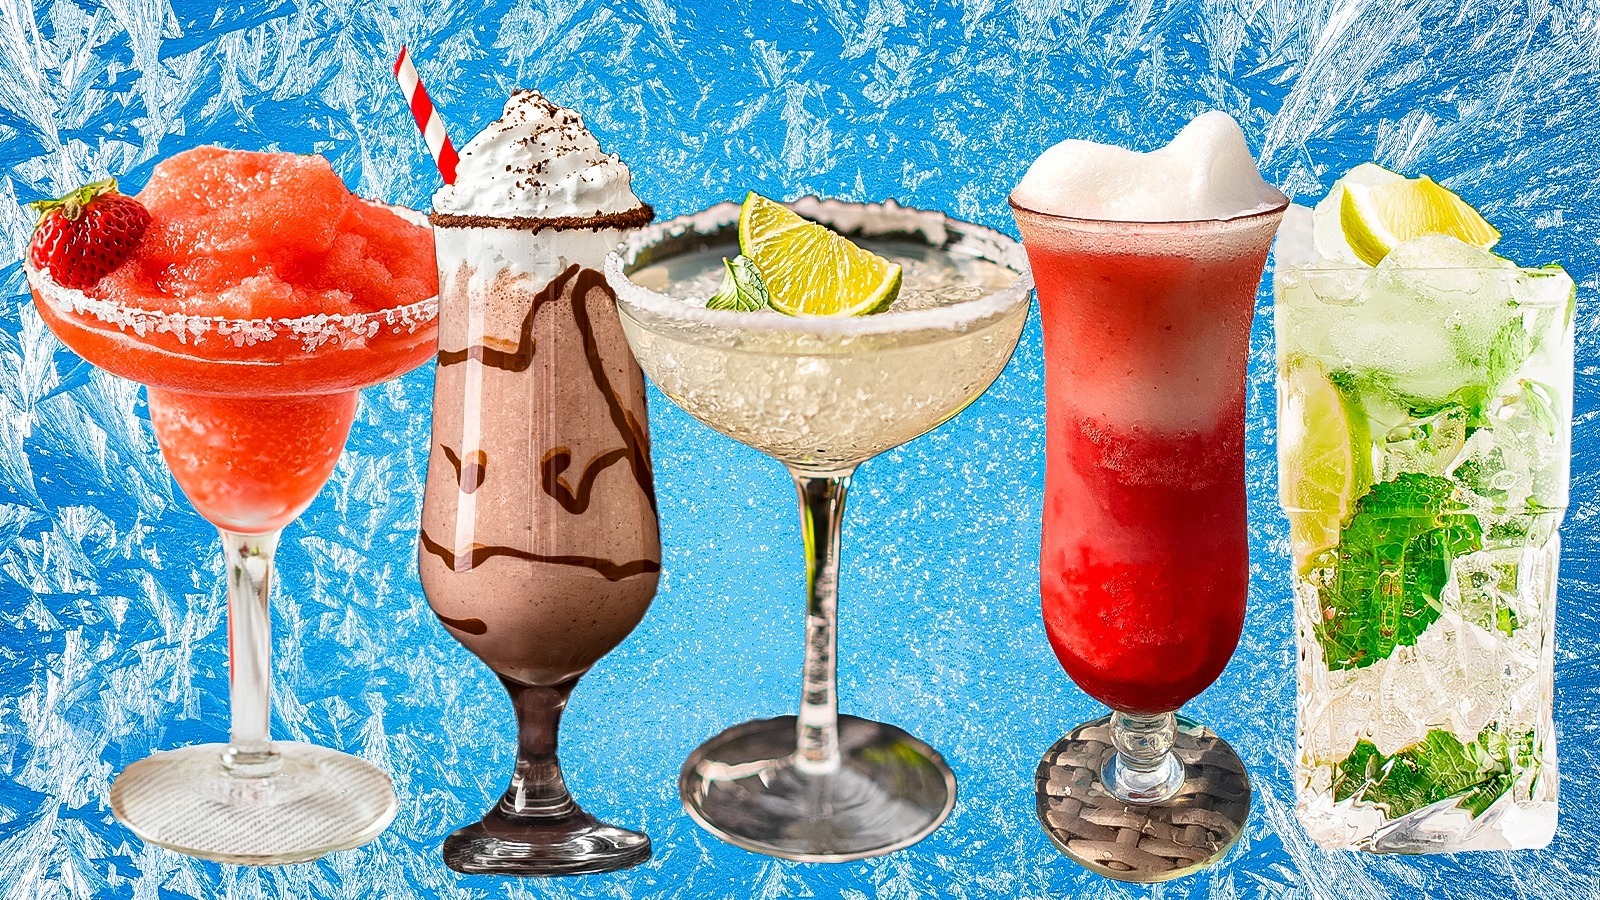 https://www.tastingtable.com/img/gallery/26-popular-frozen-cocktails-ranked-best-to-worst/l-intro-1684870196.jpg